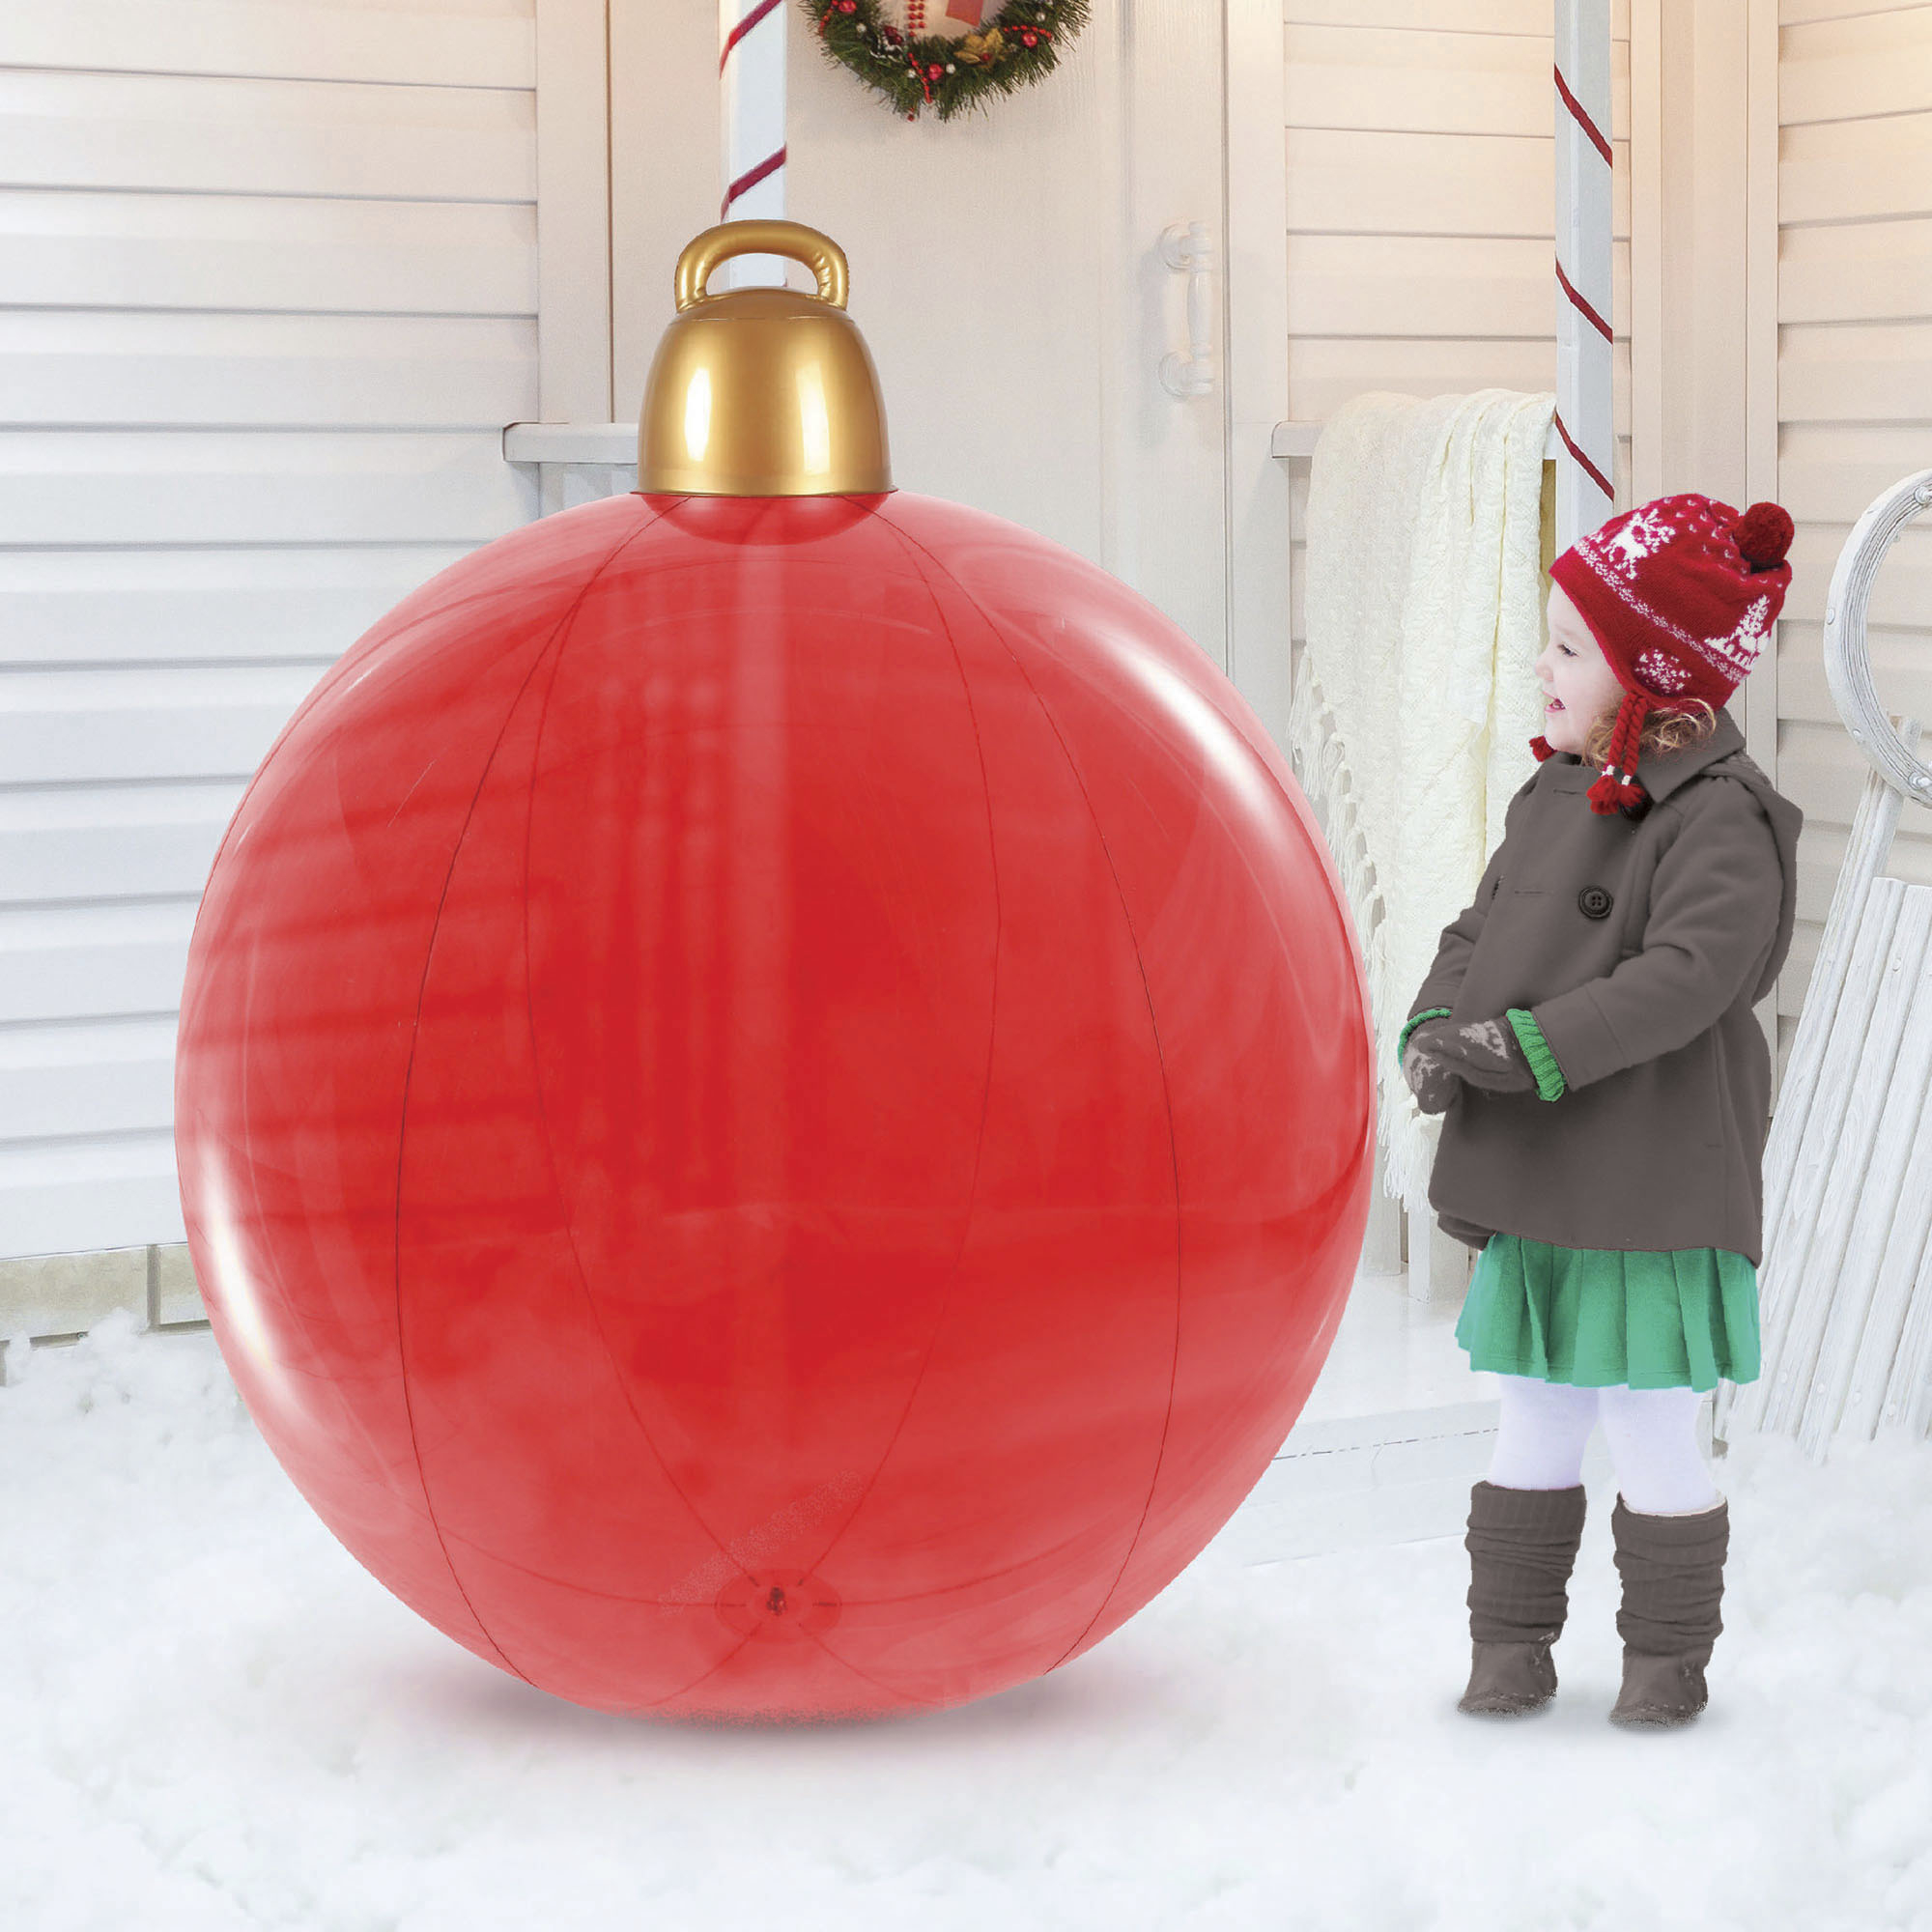 Usmixi Under 5 Dollars Inflatable Christmas Ornaments Oversized